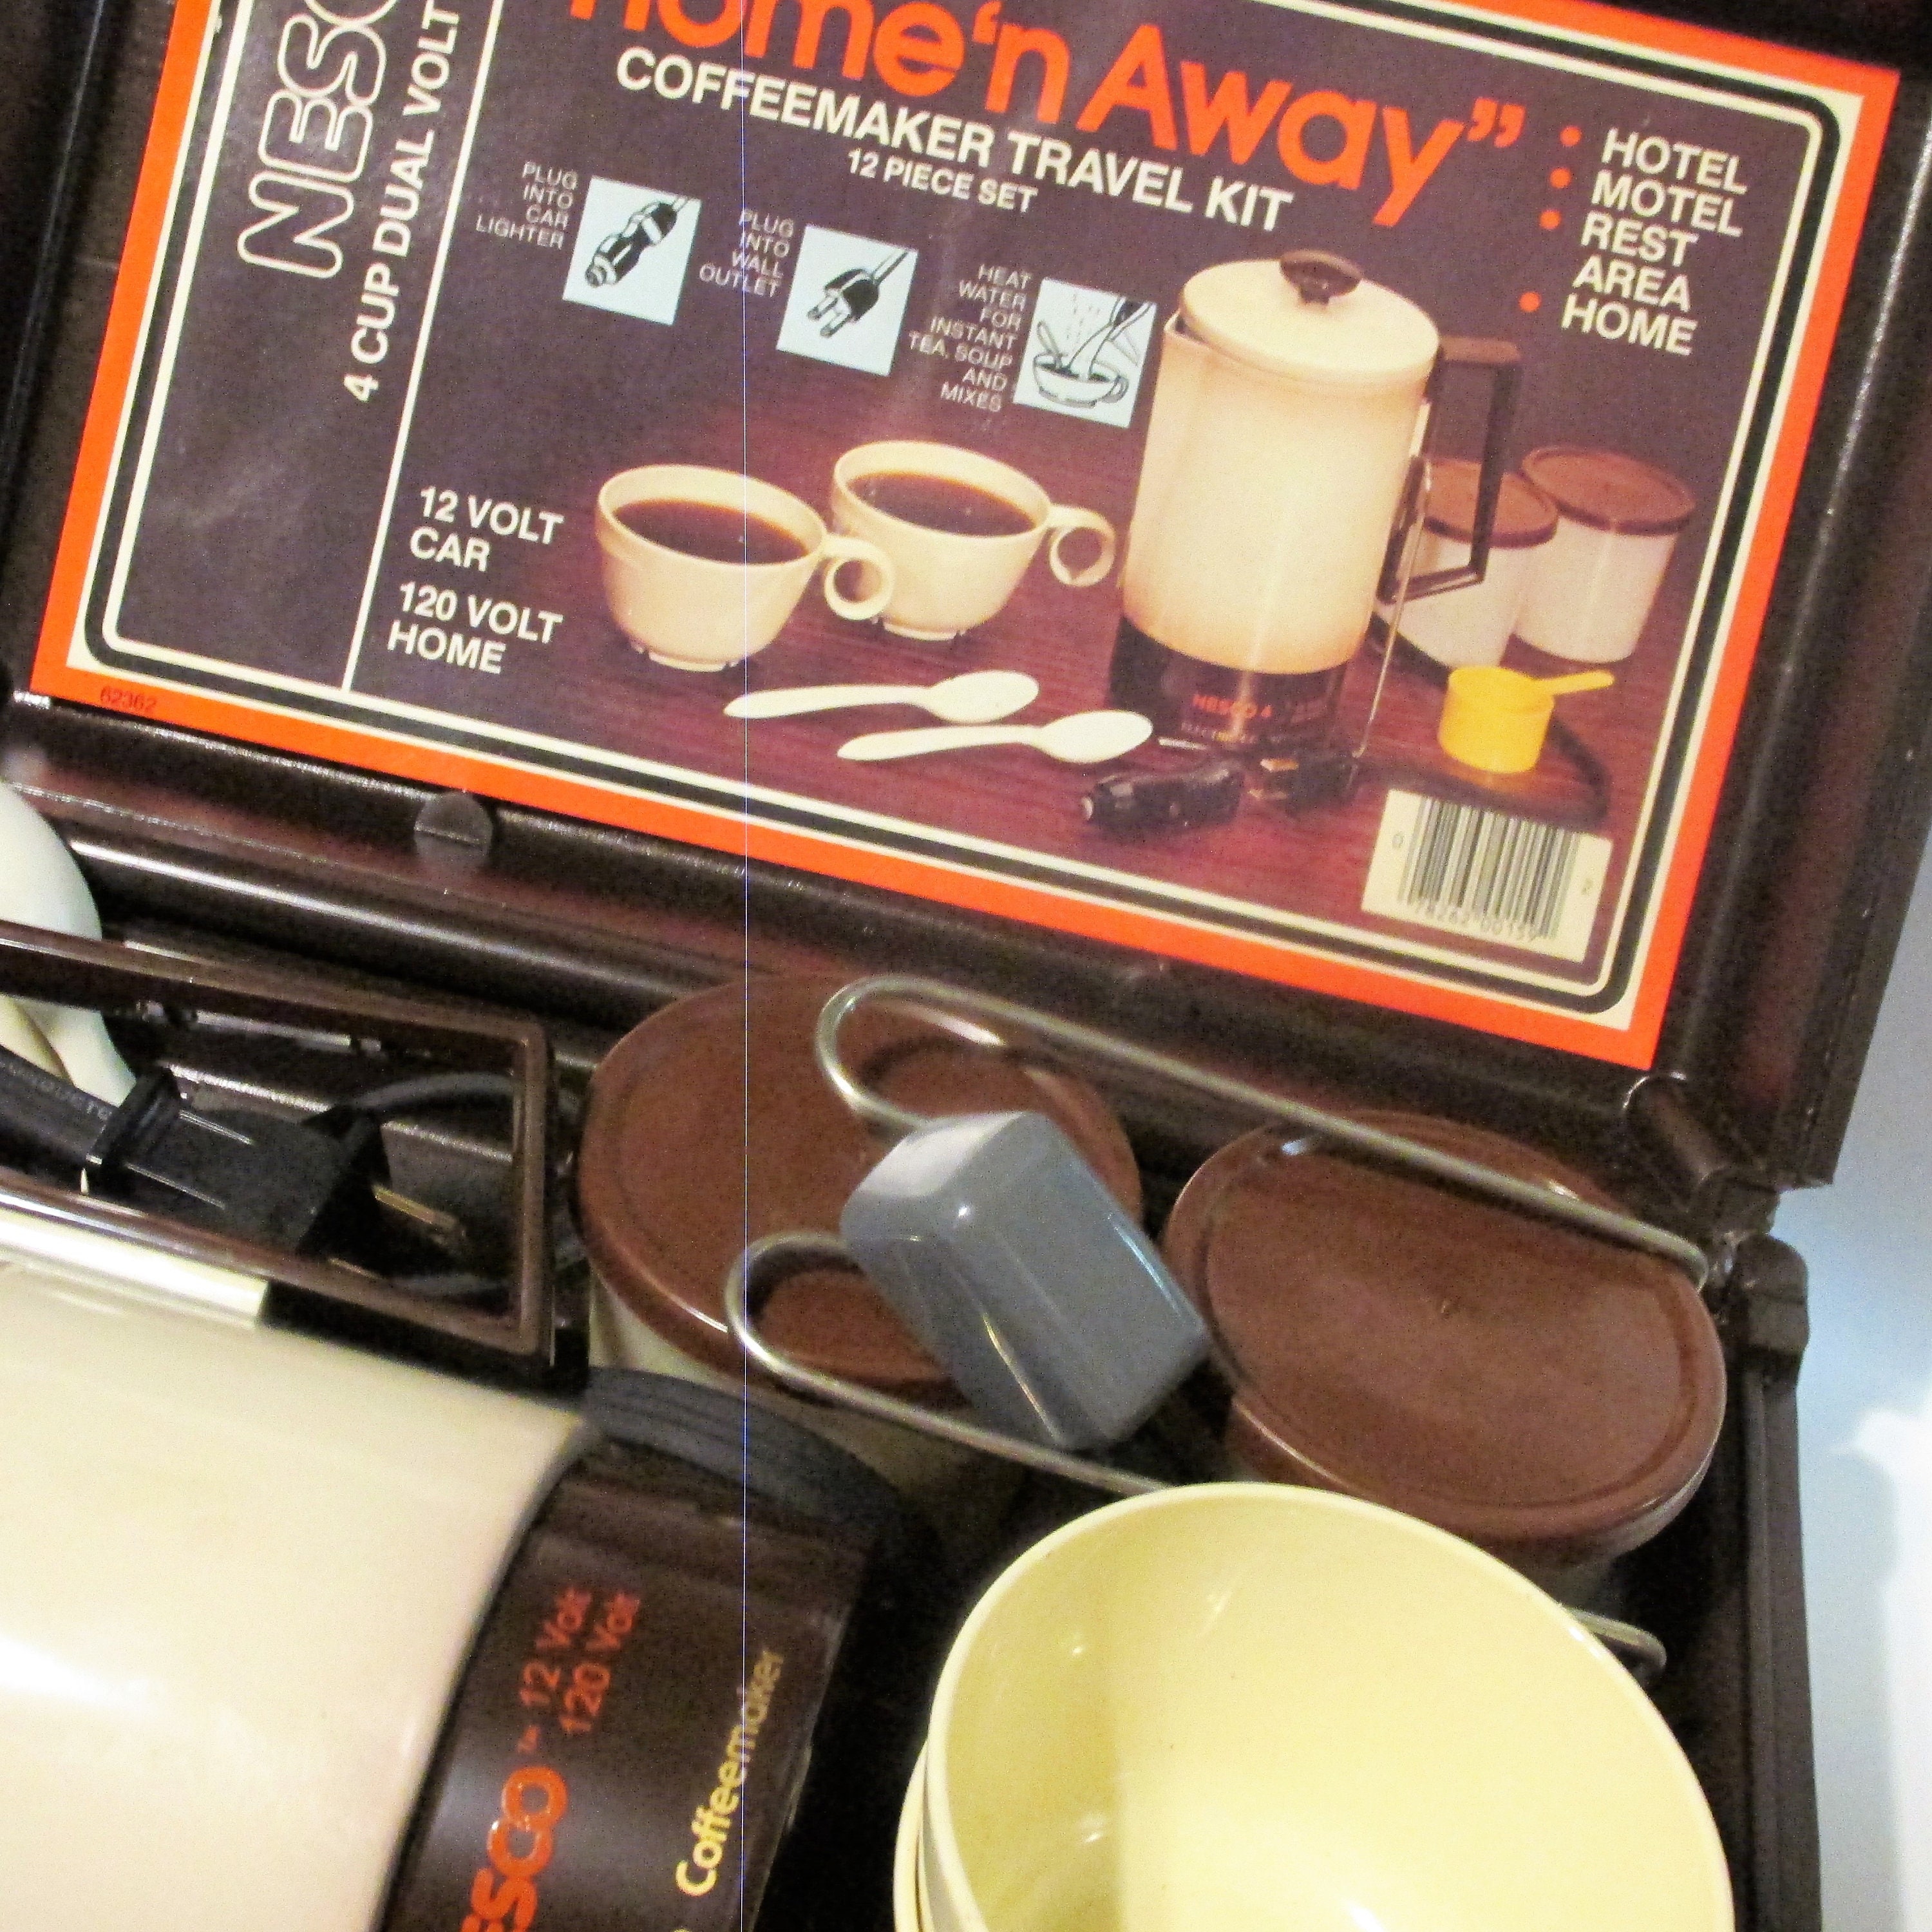 Nesco 30 Cup Coffee Maker Review 